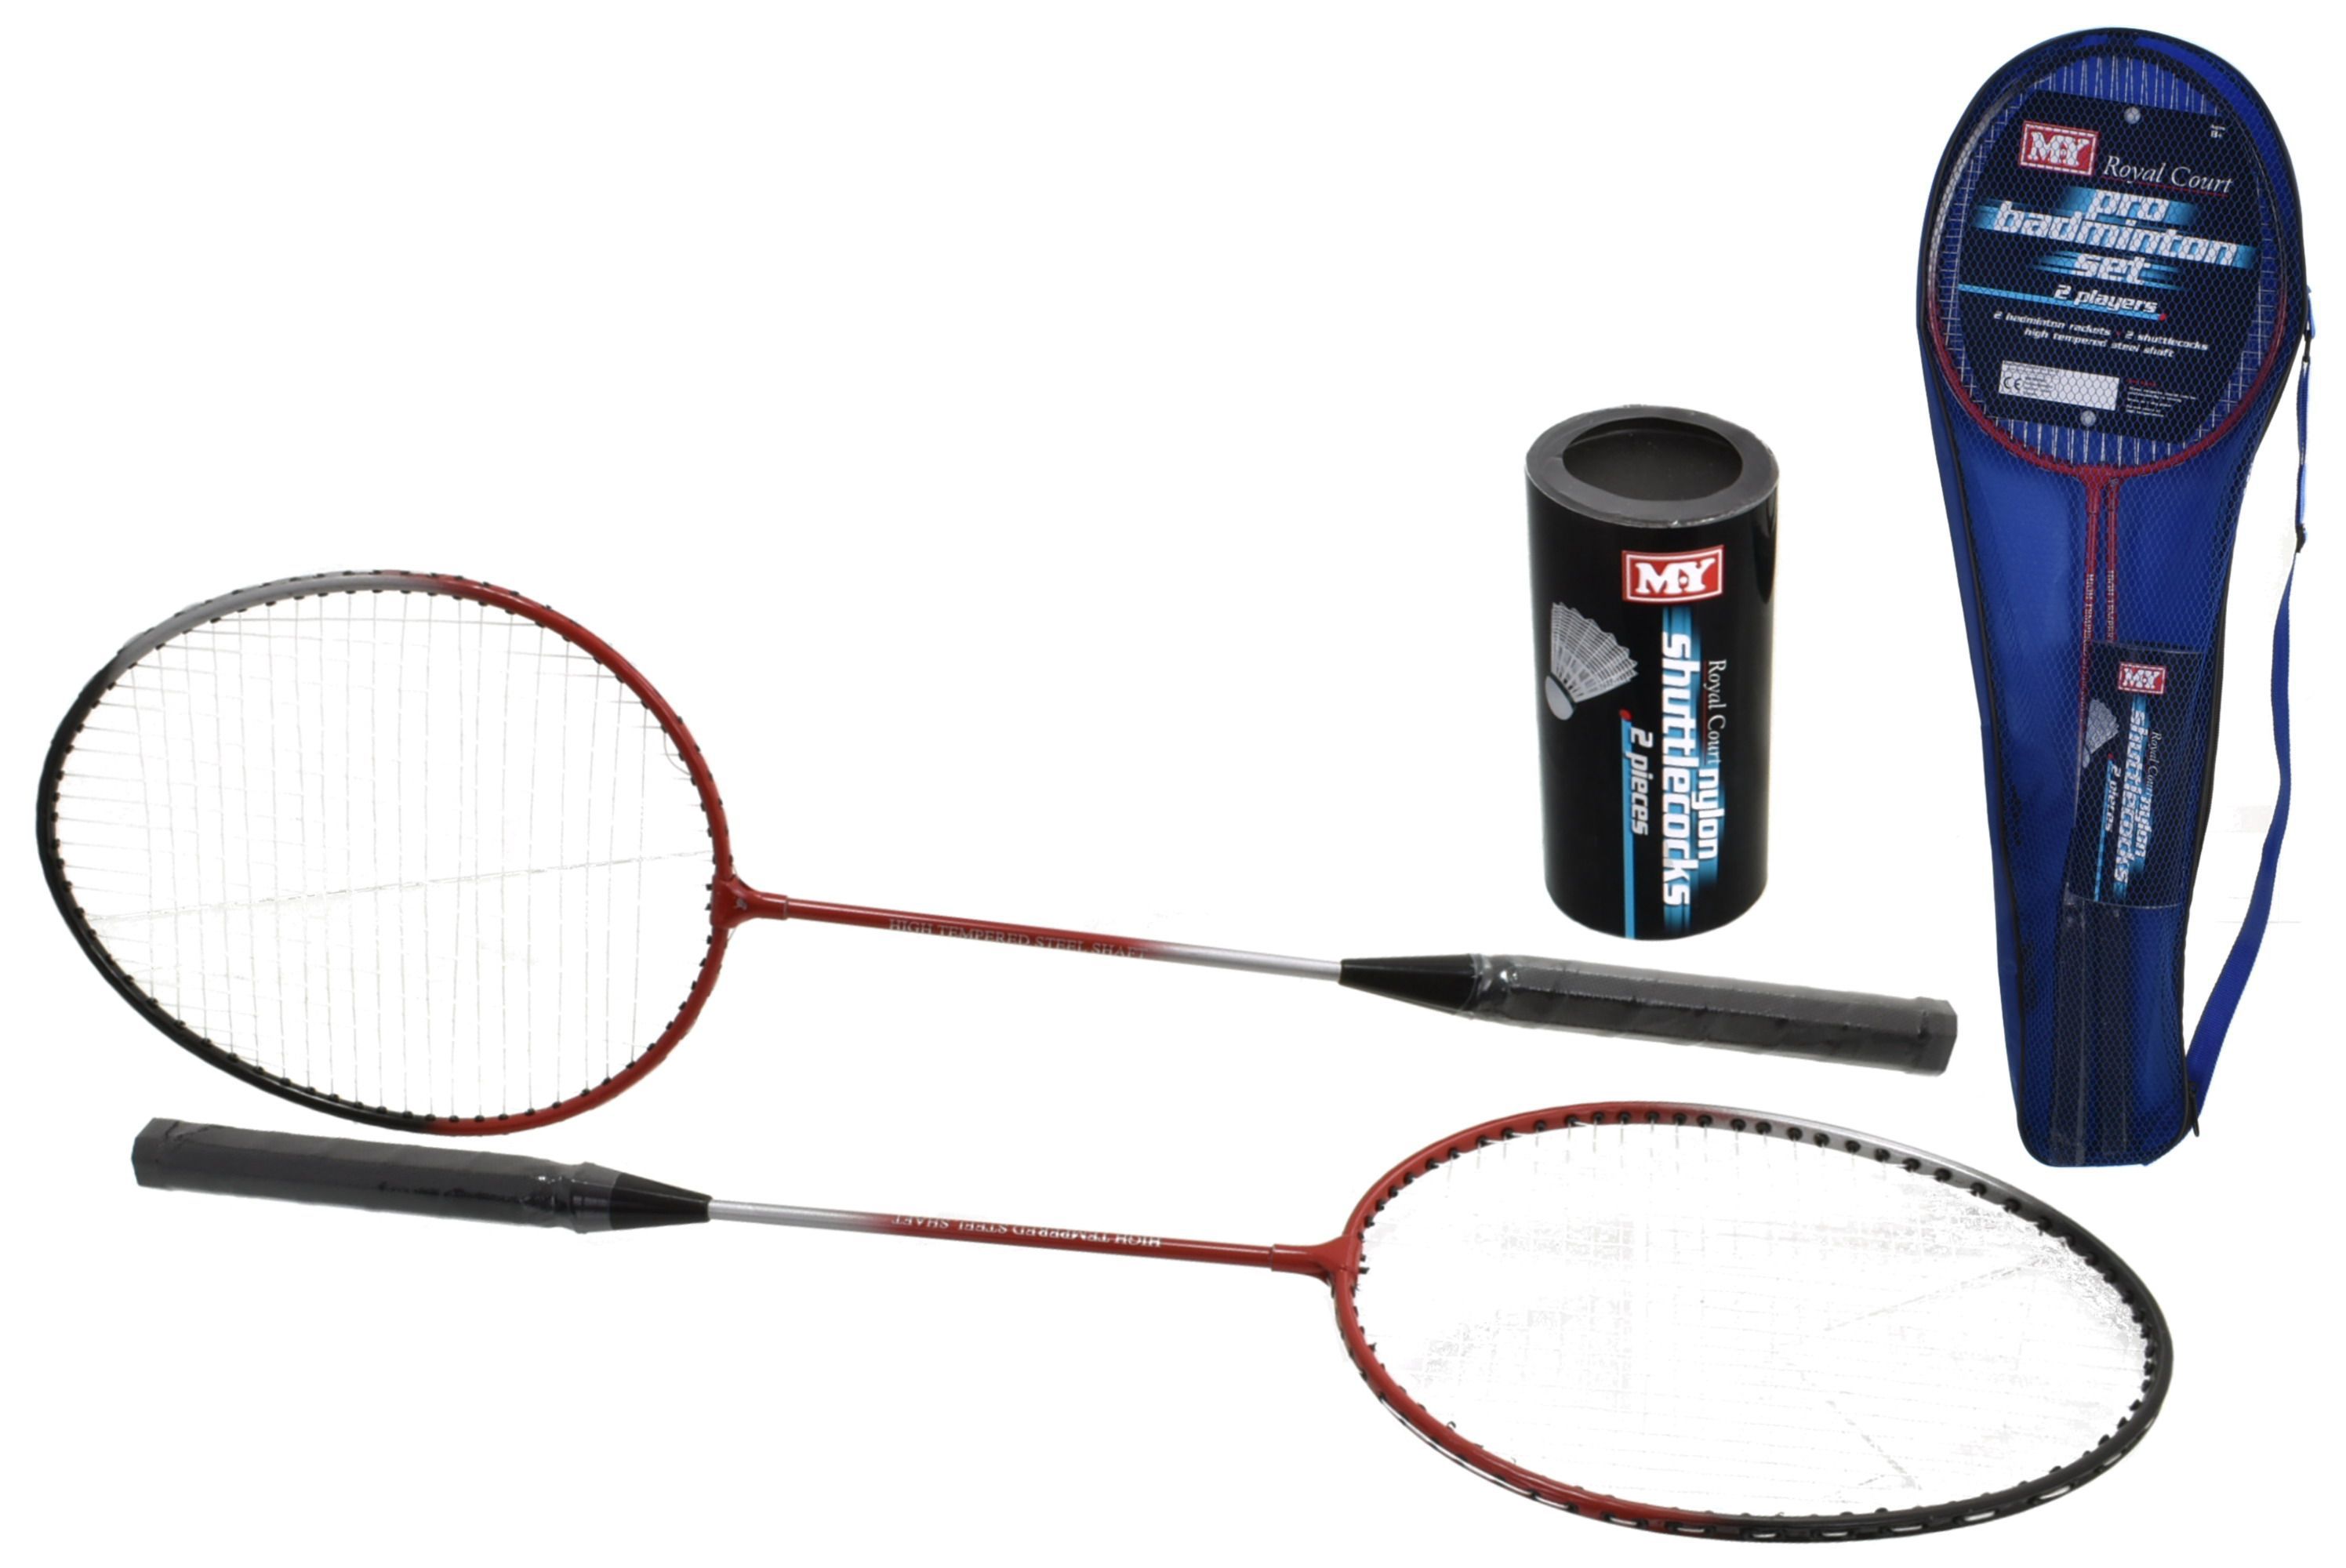 Best High-Quality Badminton Pro complete badminton set, with aluminum  poles, rackets and birdies